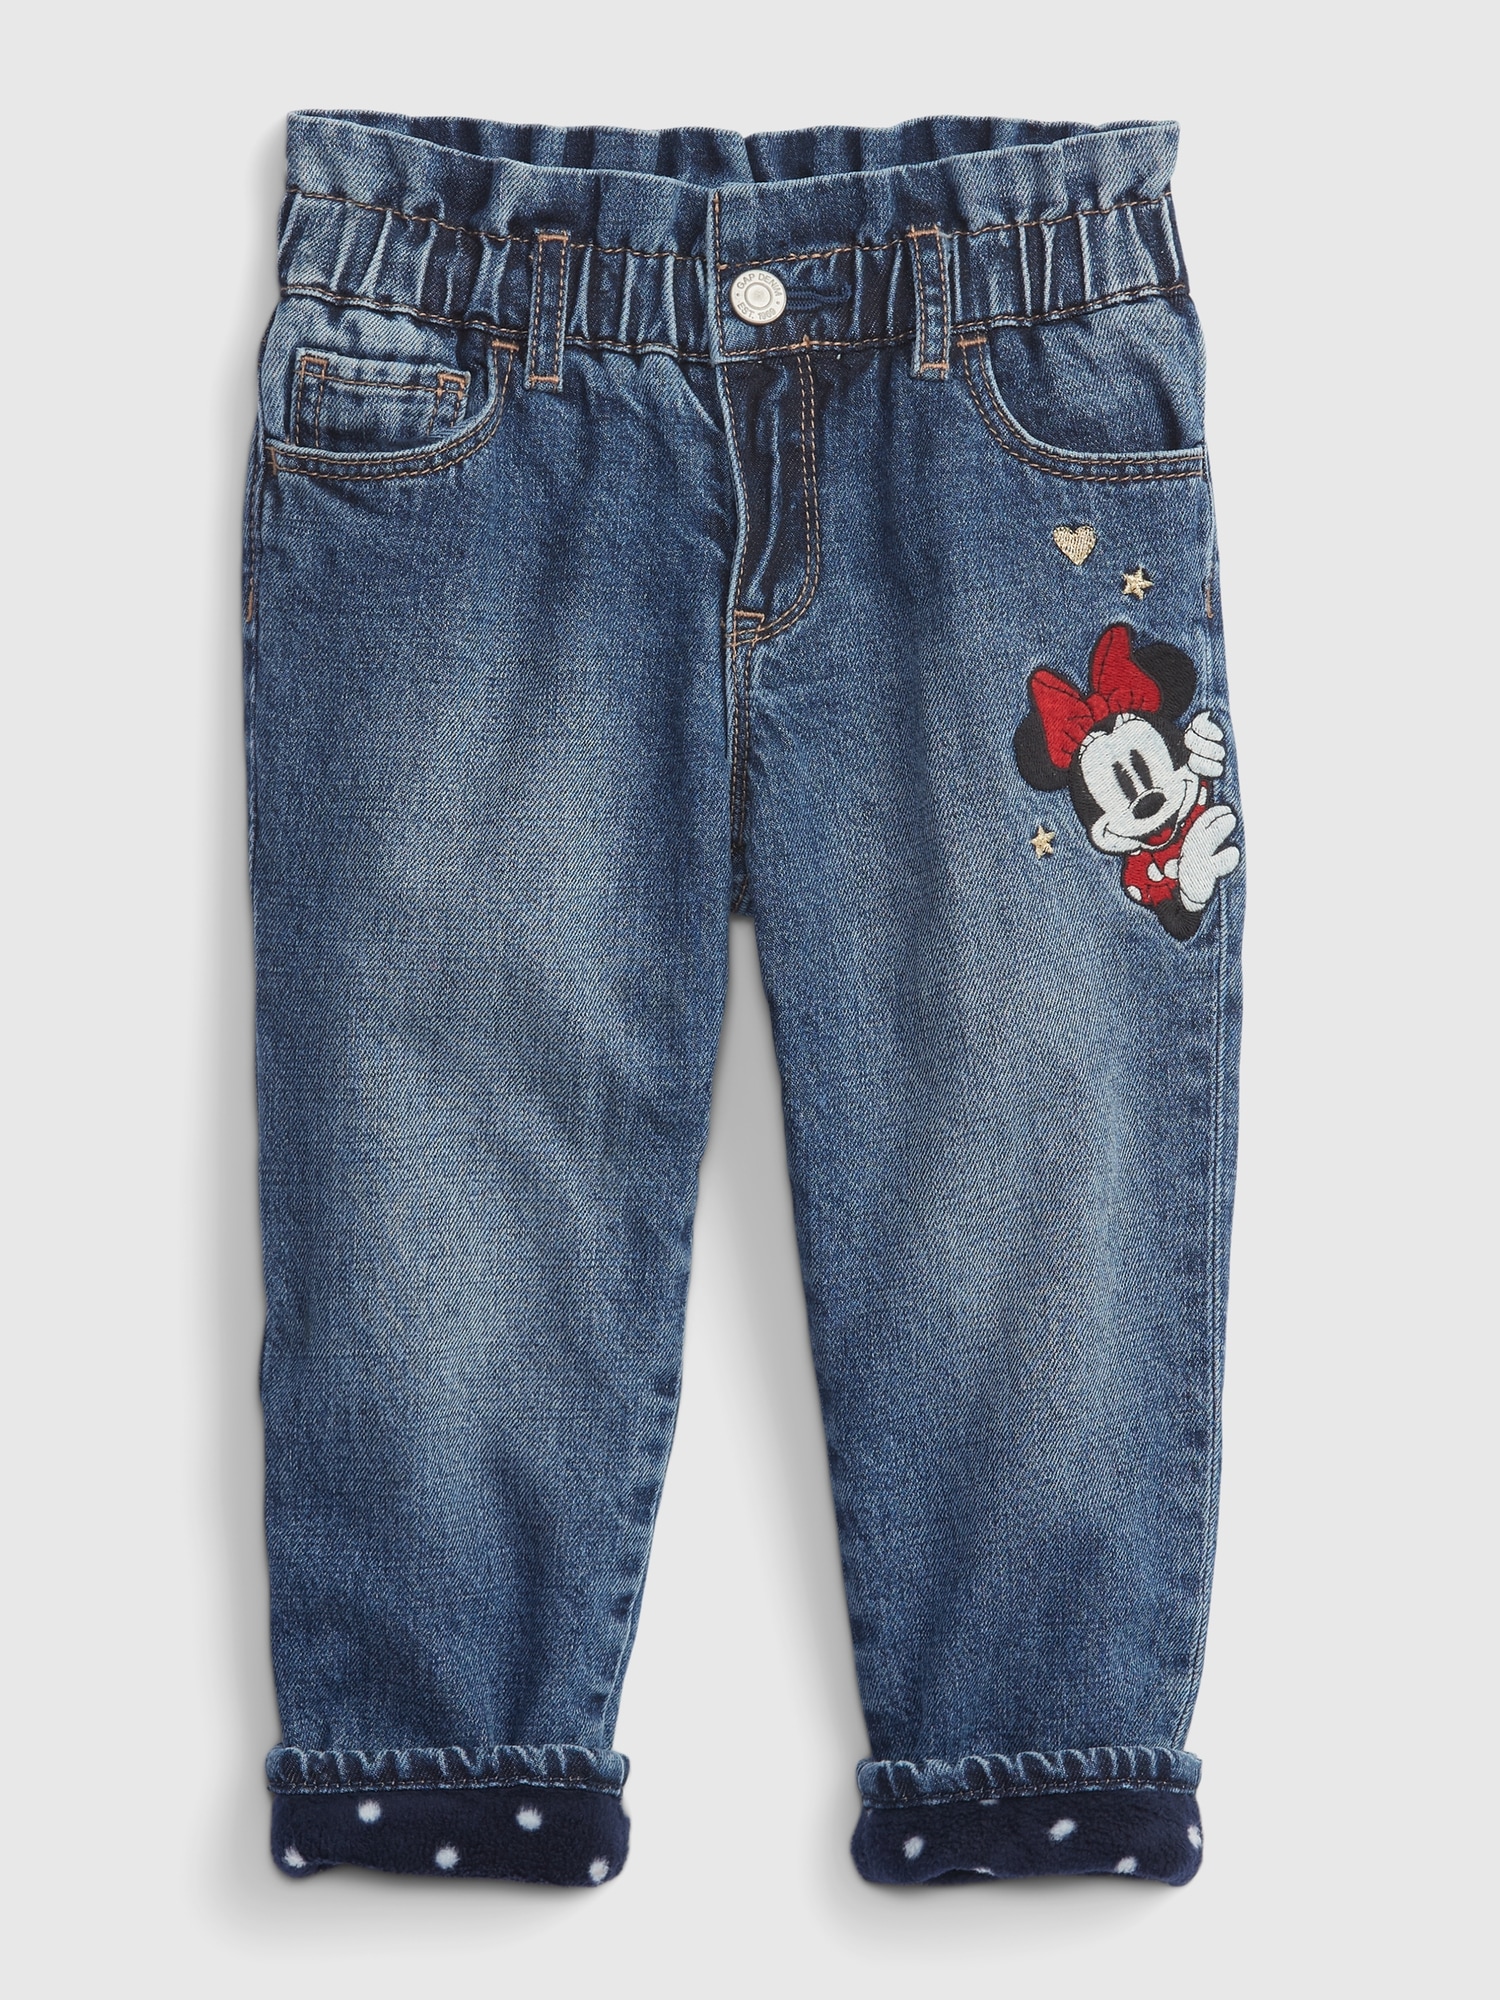 Gap - babyGap | Disney Minnie Mouse Pull-On Sweatpants gray